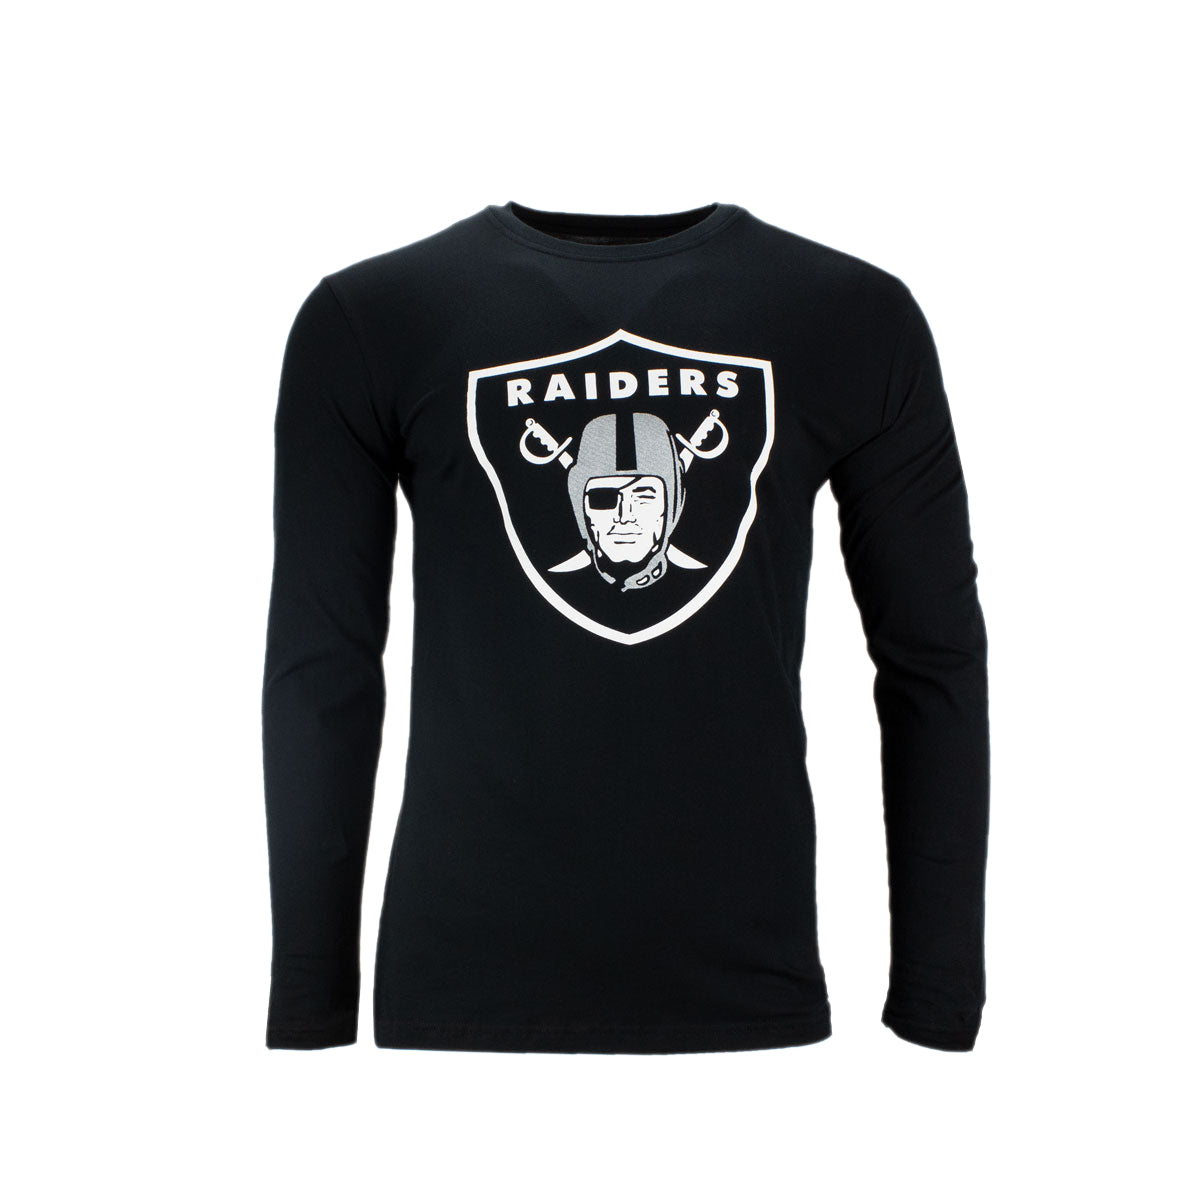 Fanatics NFL Las Vegas Oakland Raiders langarm Shirt Herren 1568MBLK1ADORA L